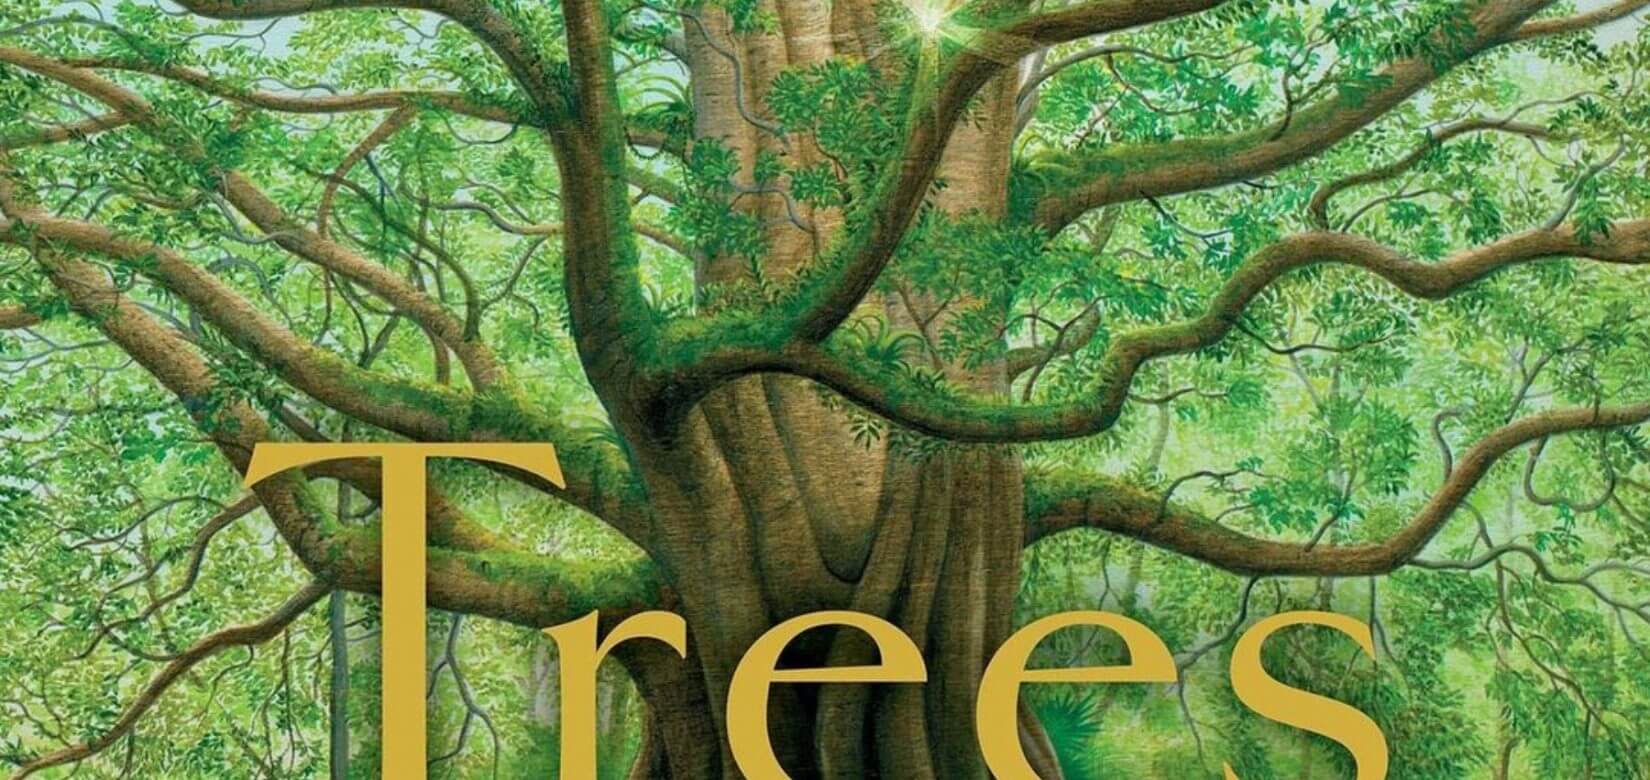 Trees: Το παιδικο βιβλίο που δεν πρέπει να λείπει από τη βιβιοθήκη σας